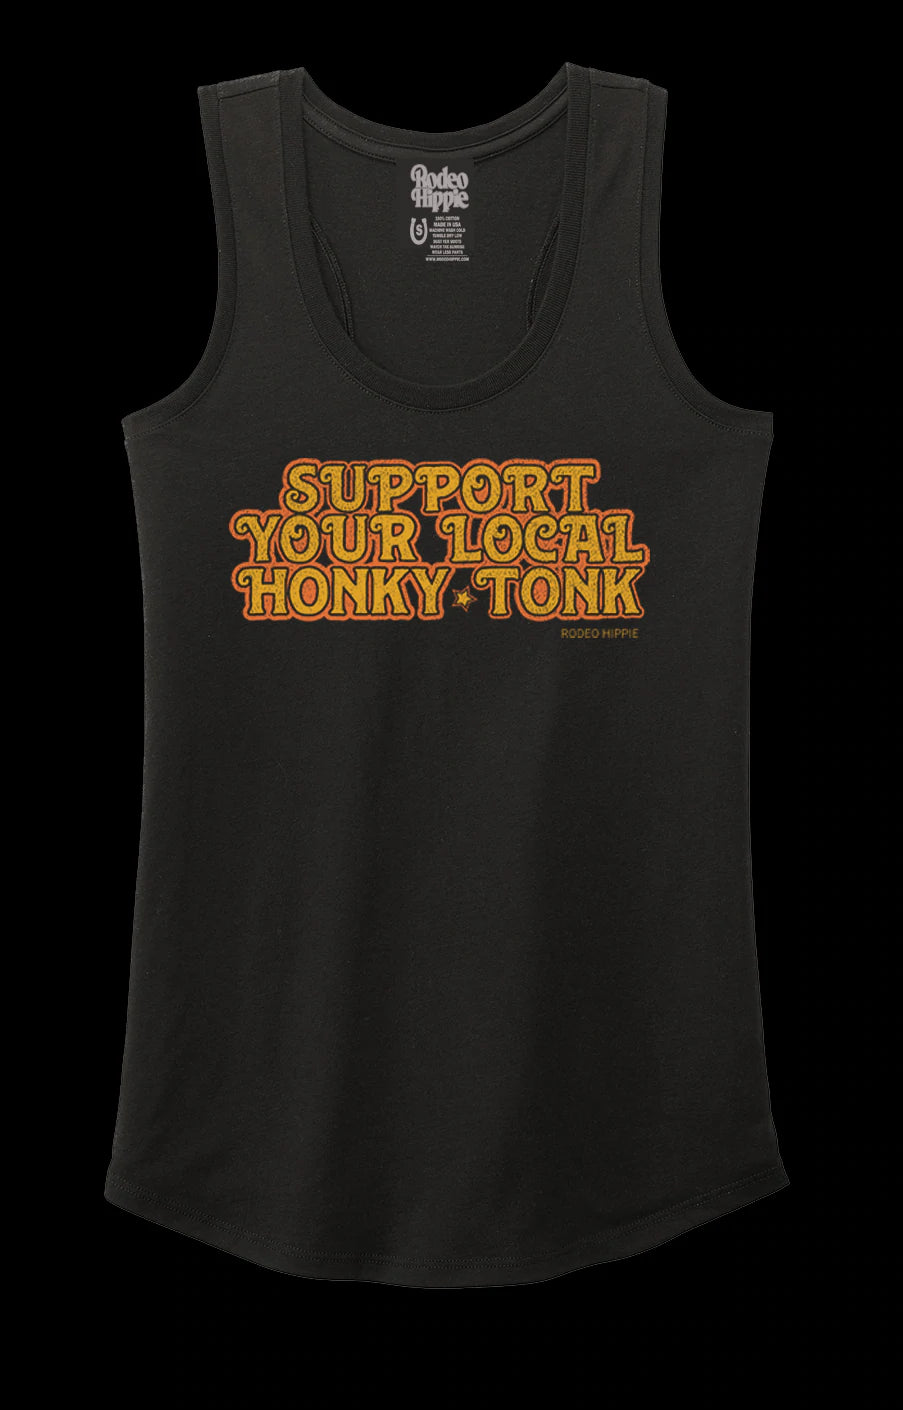 The Honky Tonk